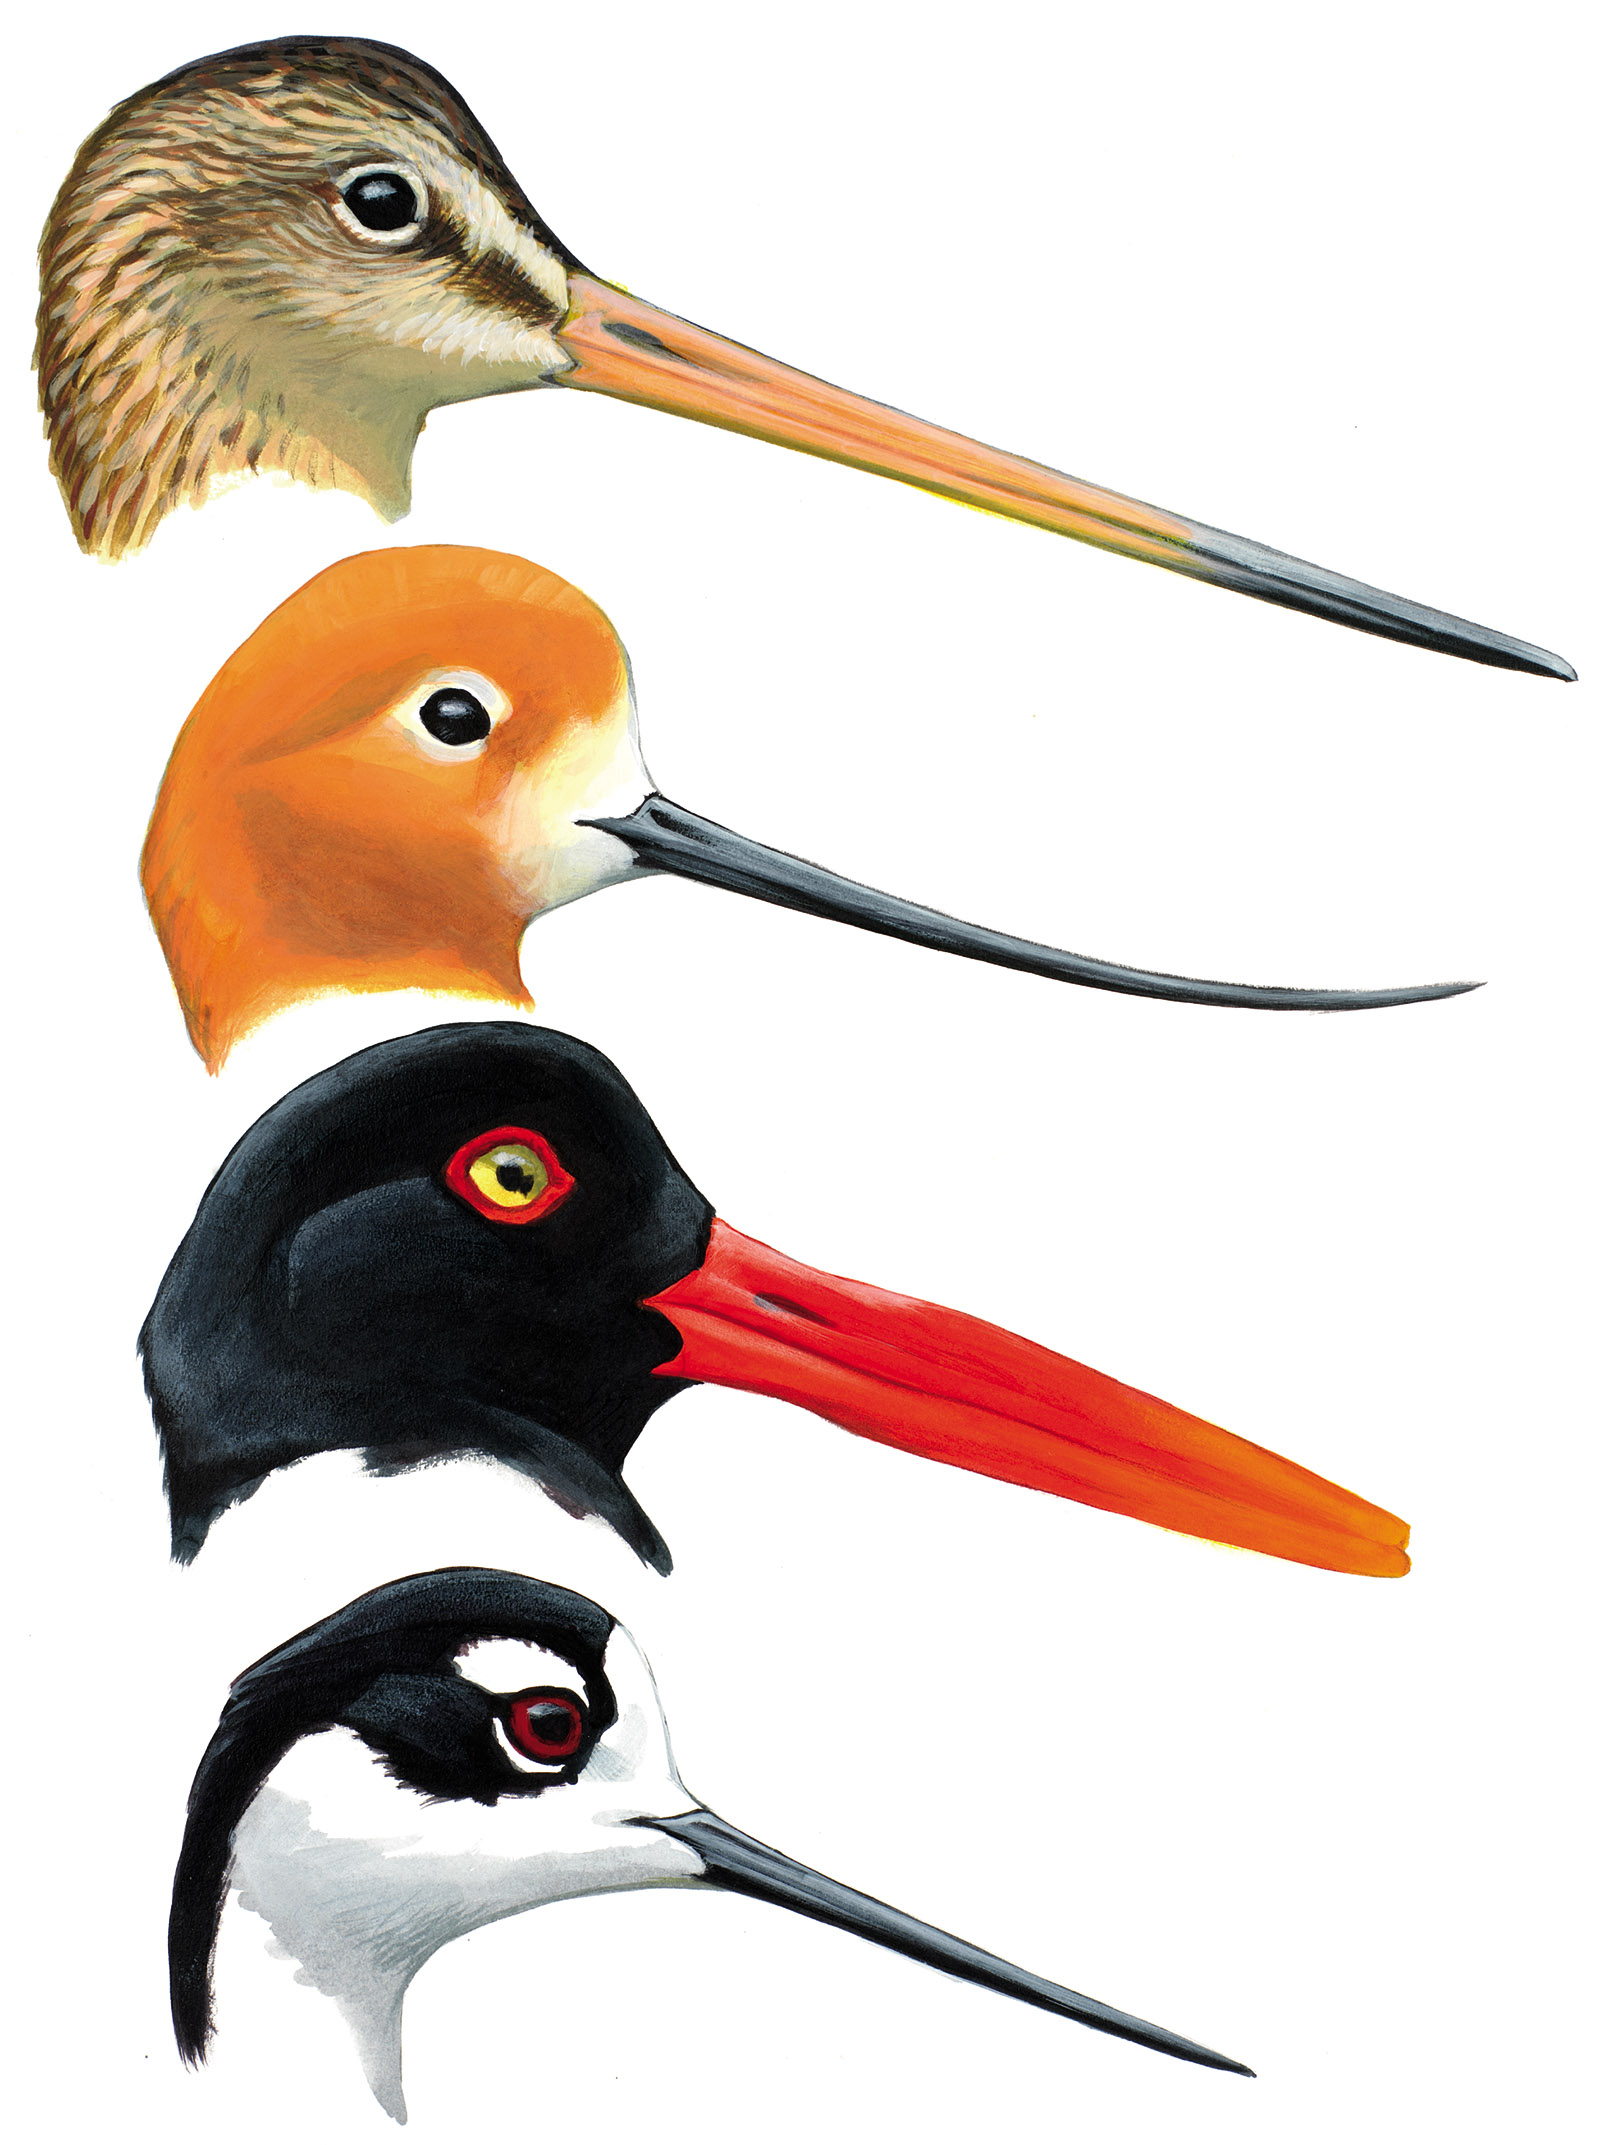 Illustration of four shorebirds: the marbled godwit, American avocet, American oystercatcher, and black-necked stilt